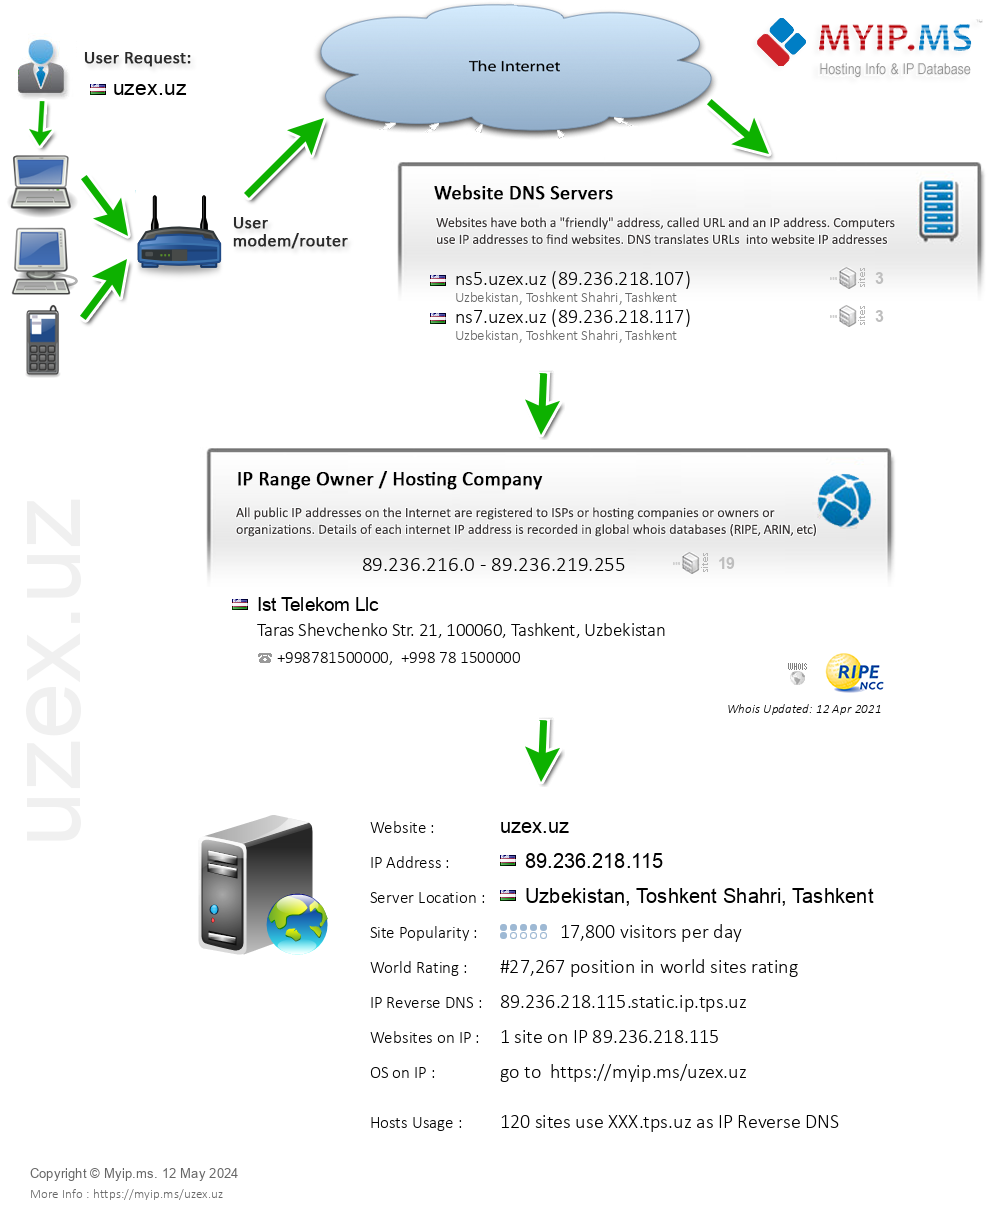 Uzex.uz - Website Hosting Visual IP Diagram